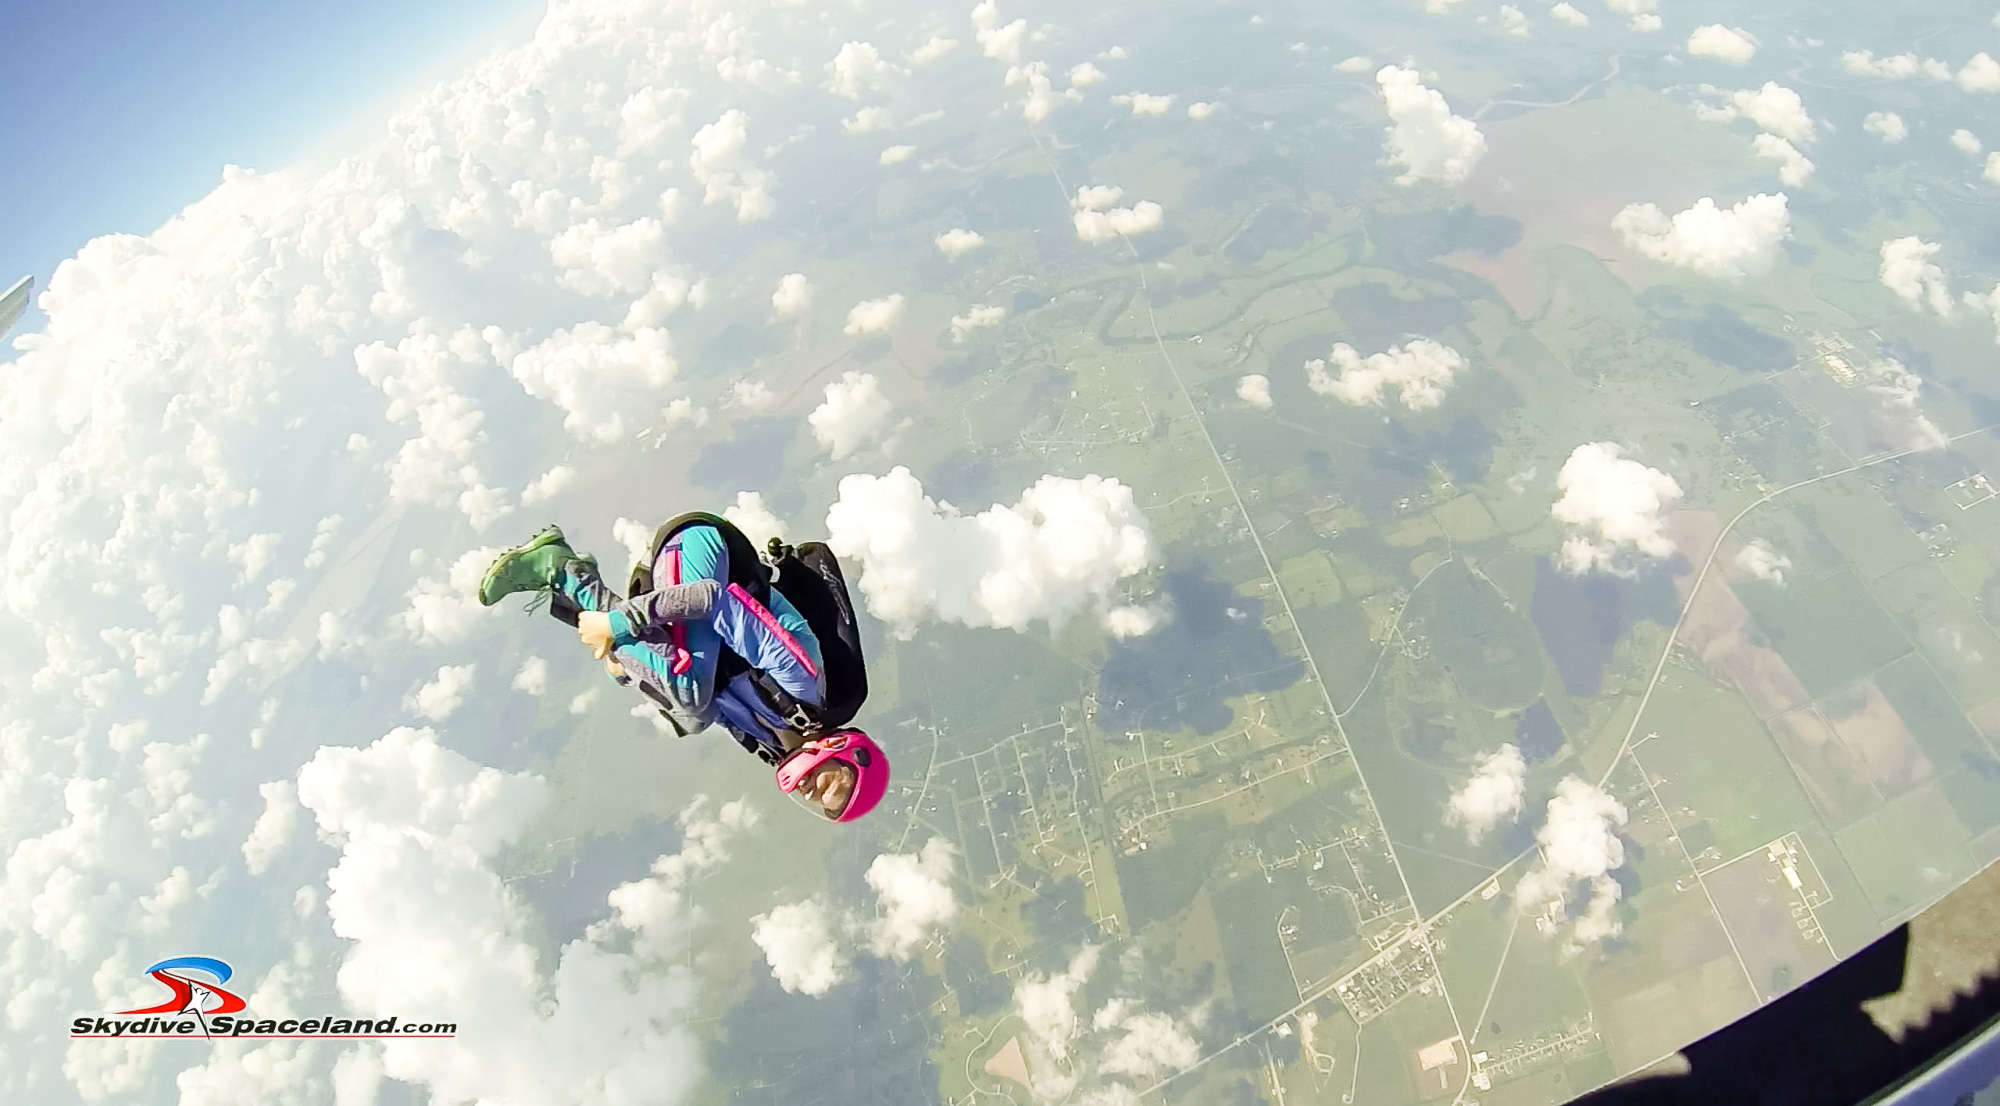 Skydiving Day-Video Screenshots-0017.jpg